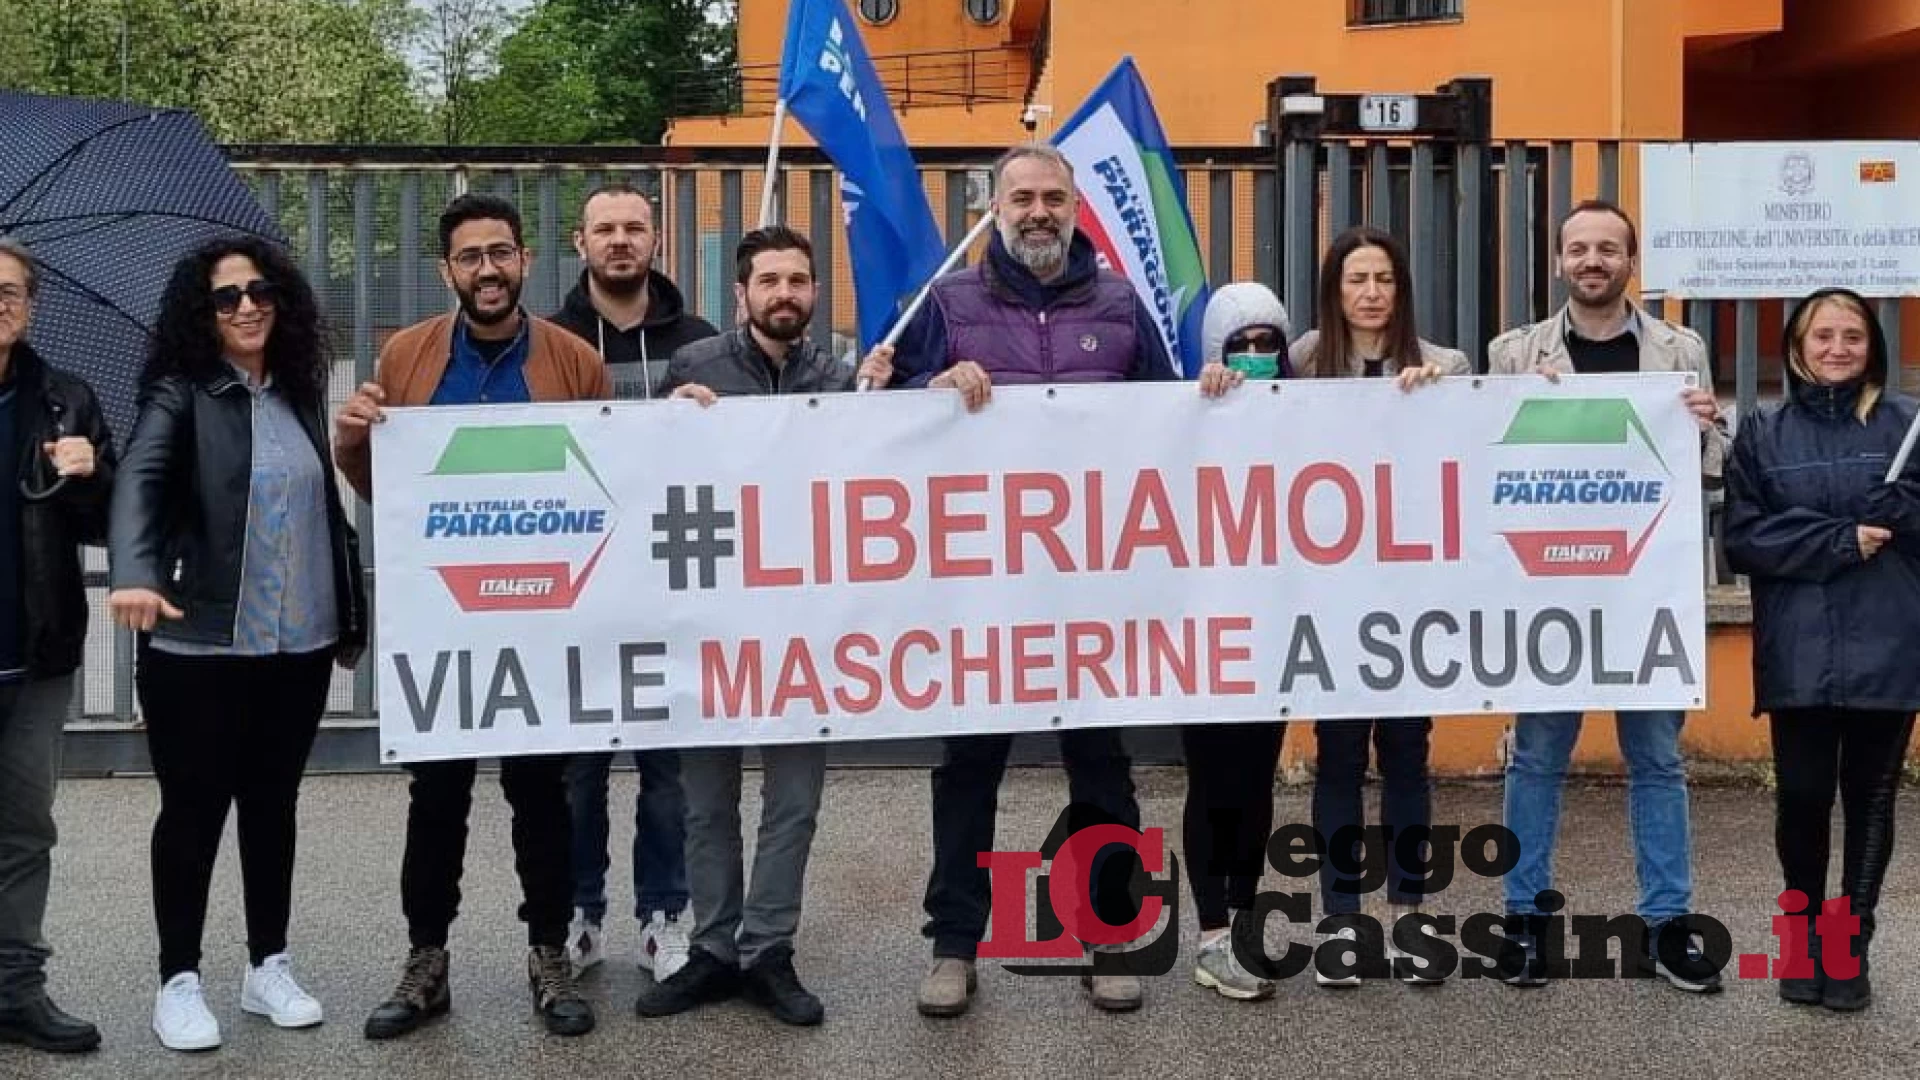 Flash mob del coordinamento provinciale di Italexit con Paragone